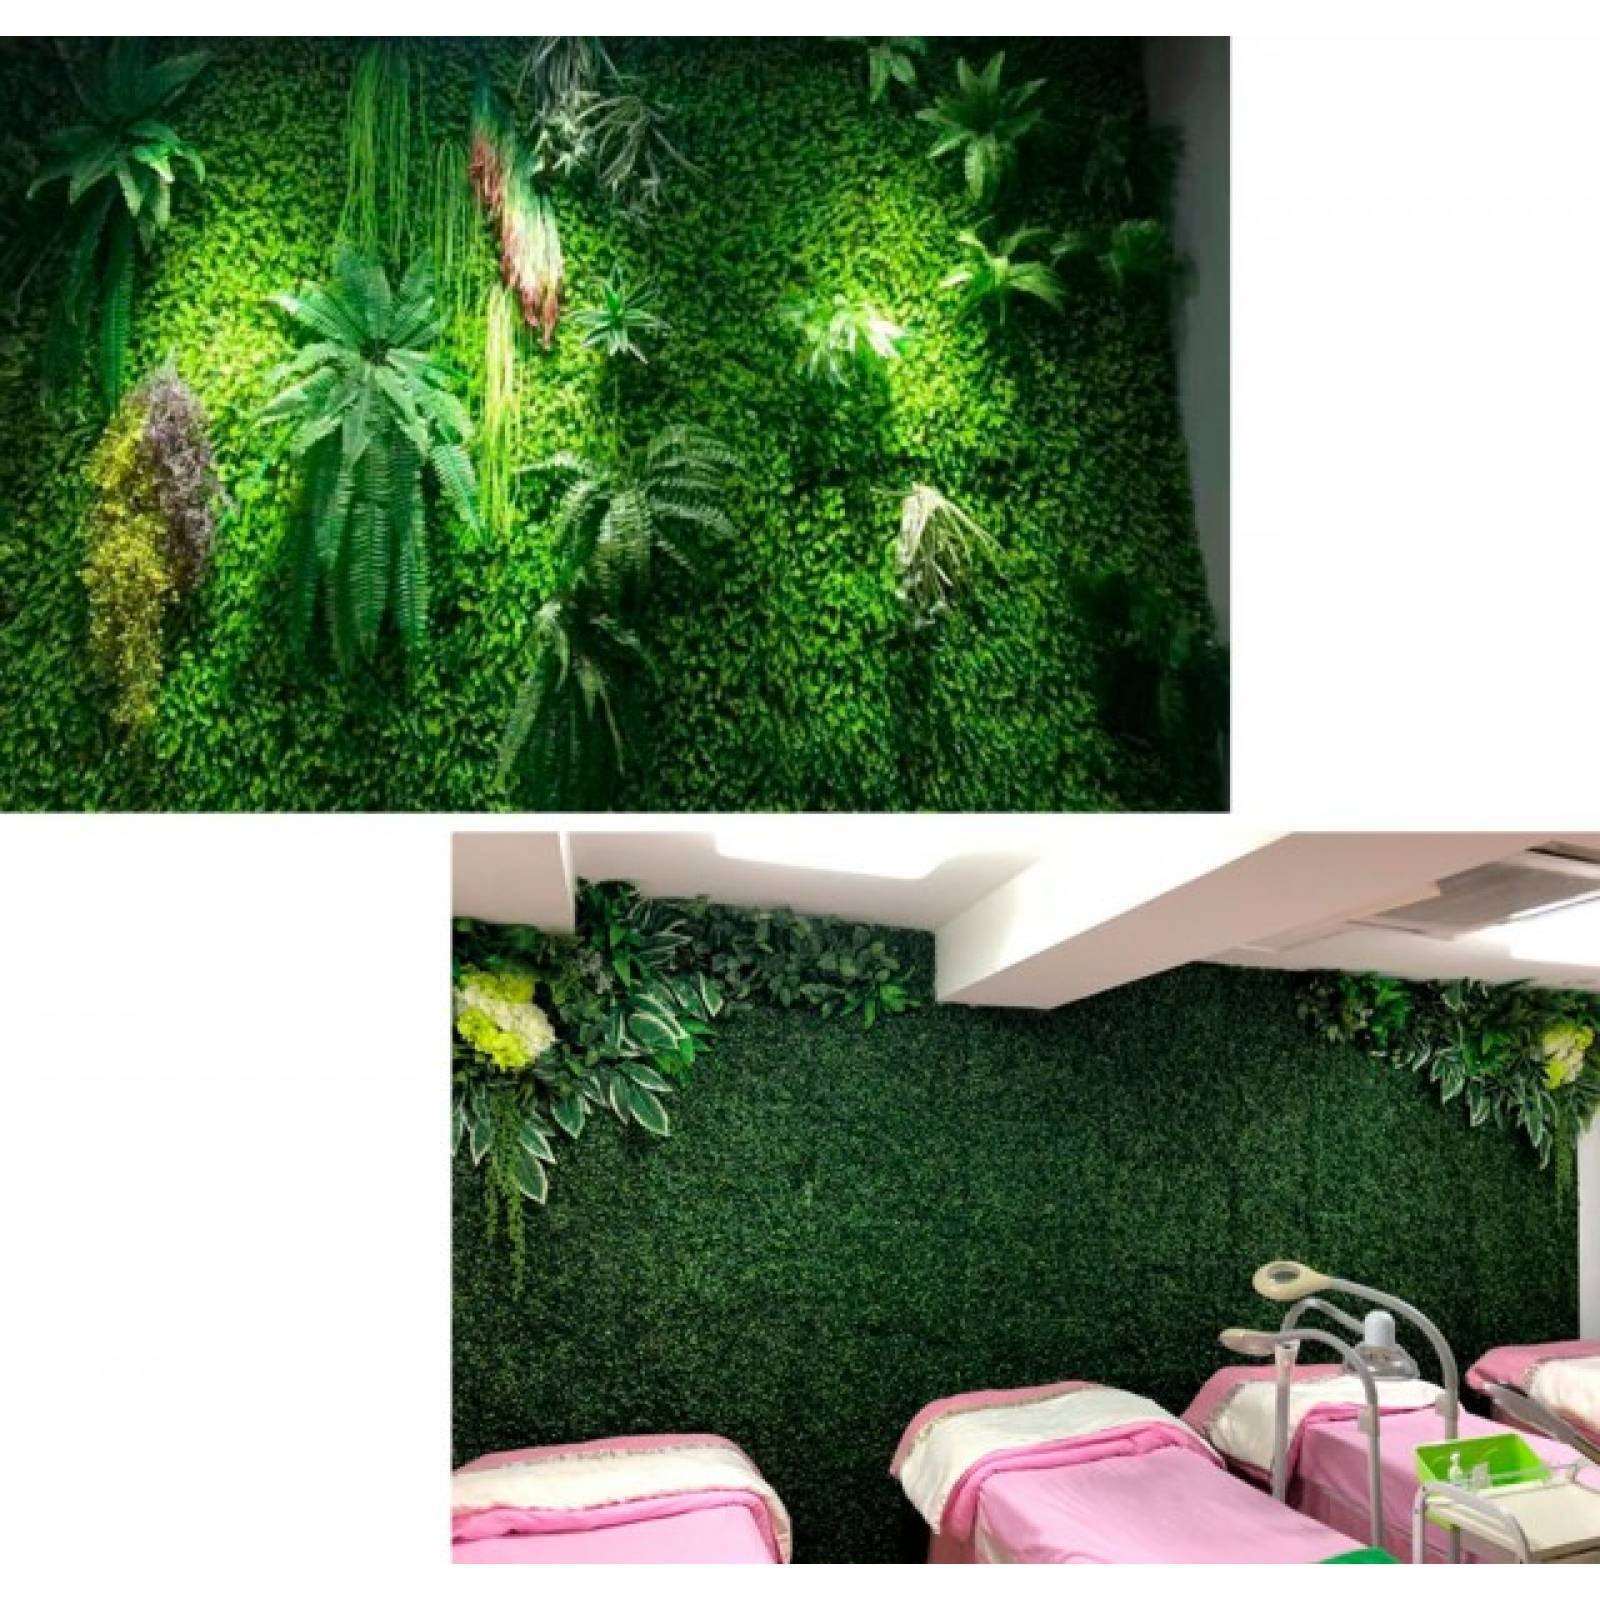 Follaje artificial 40x60 cm muro verde 4 piezas= 1m2 modelo agua